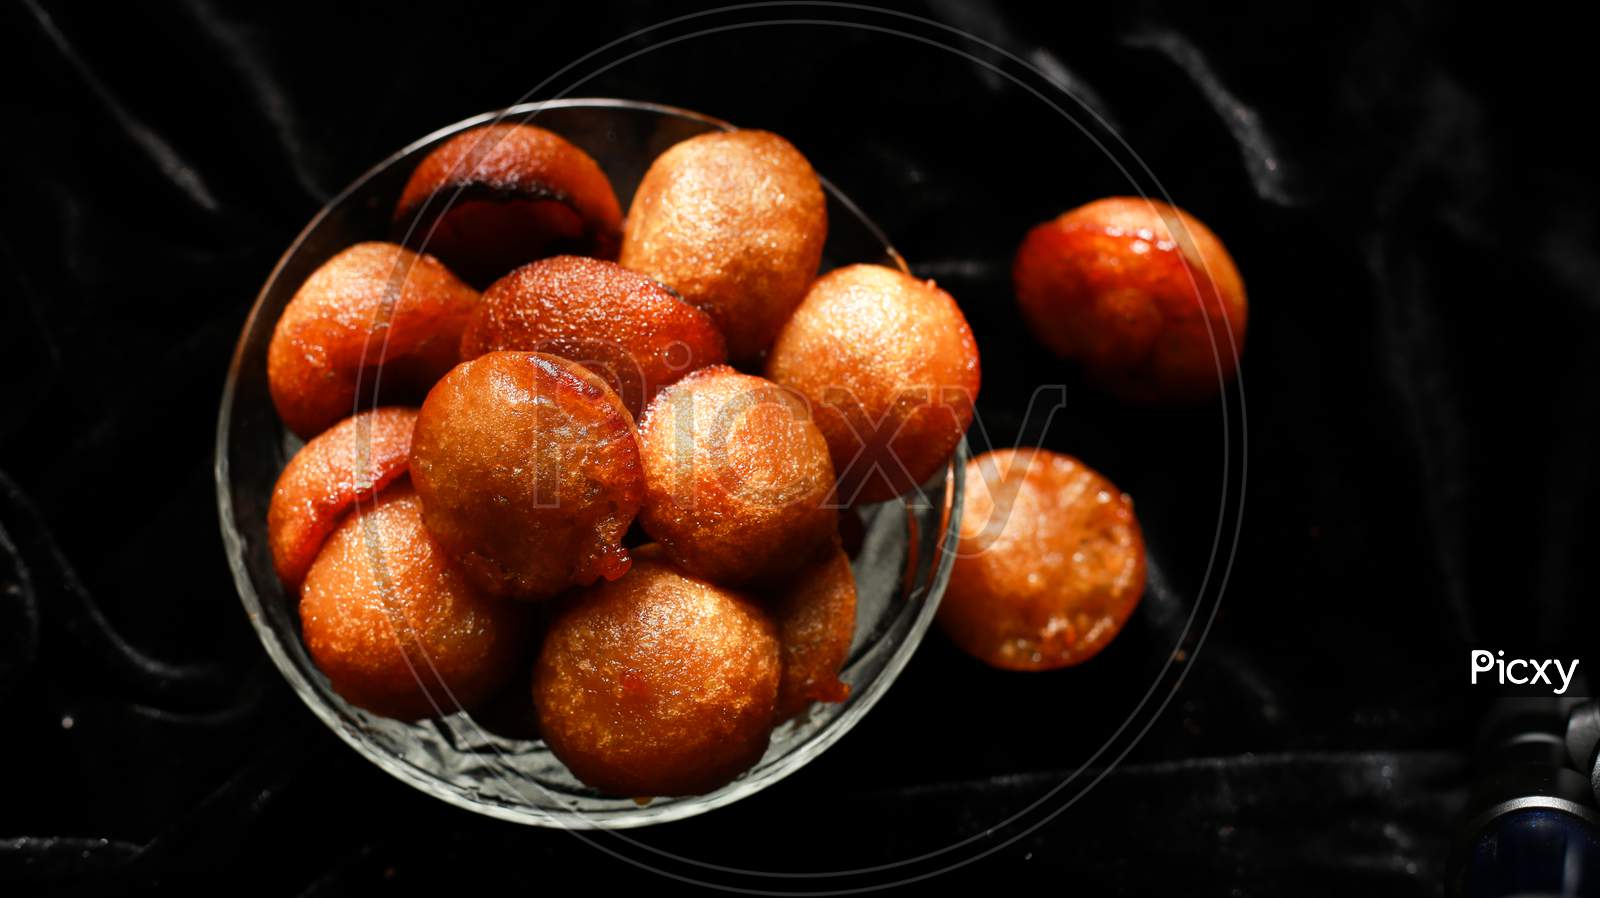 Homemade Kerala snack unniyappam in dark background